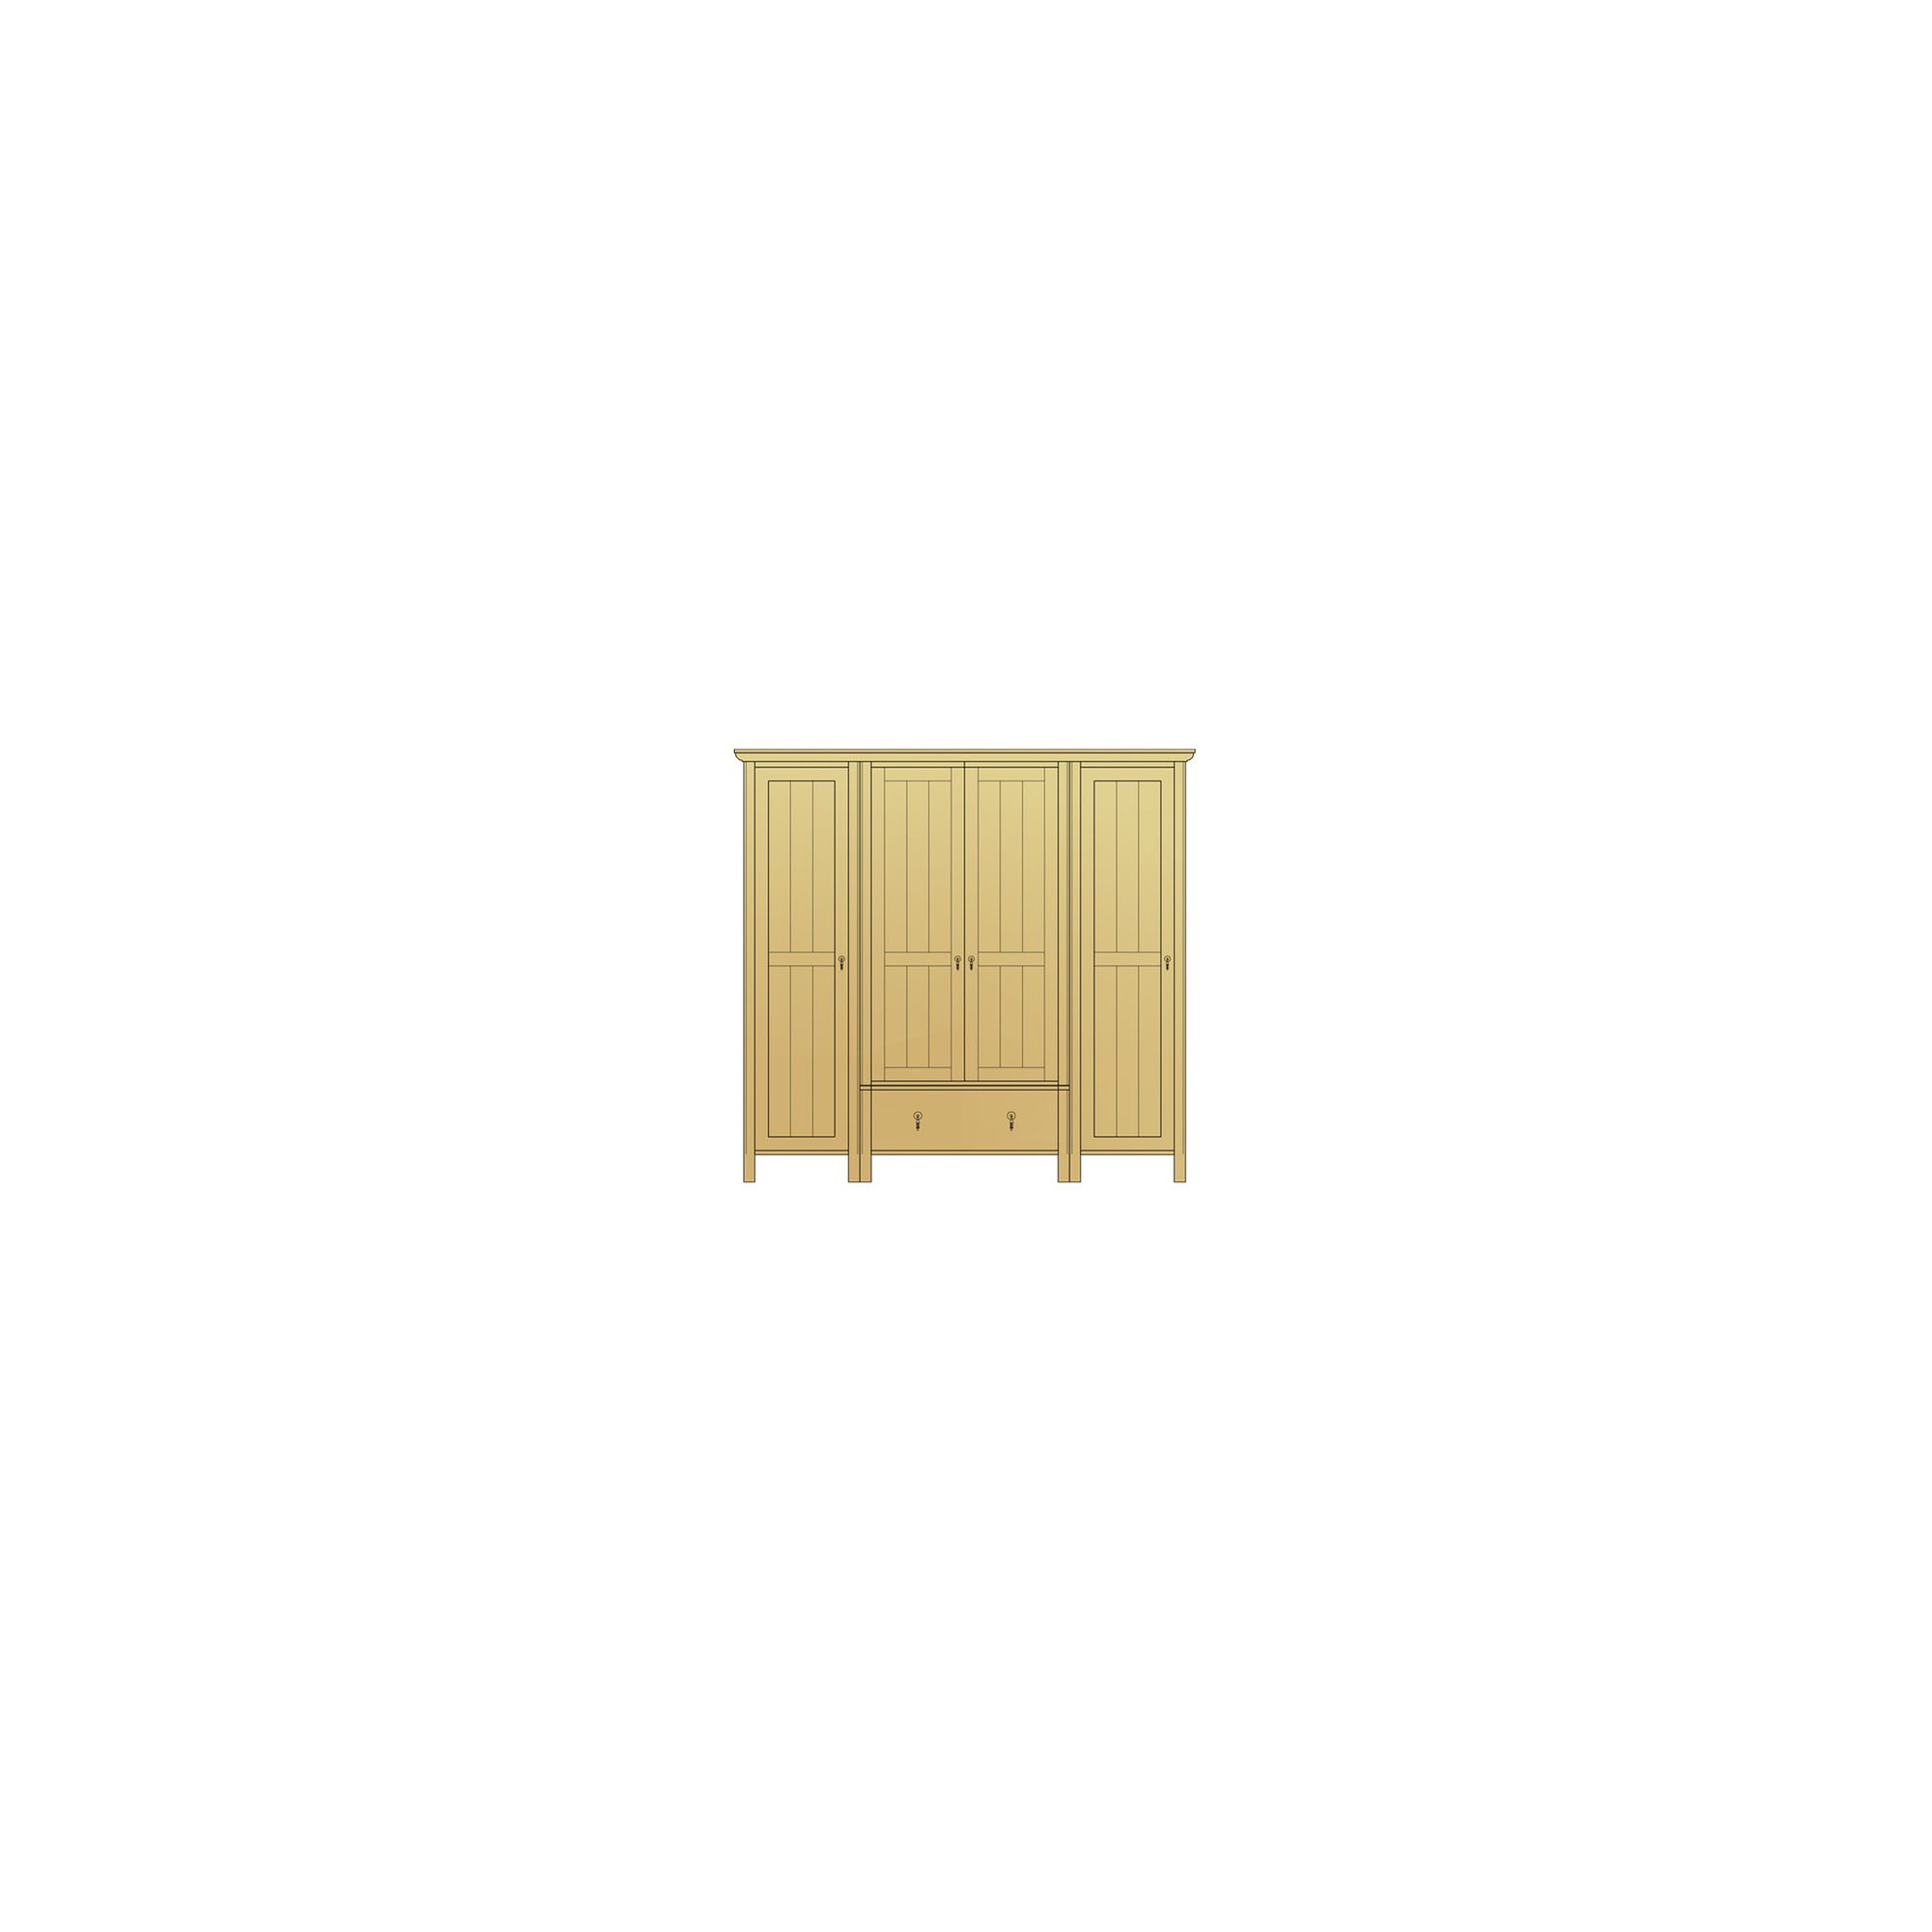 Sherry Designs Simply Bedroom 4 Door 1 Drawer Combination Oak Wardrobe at Tesco Direct